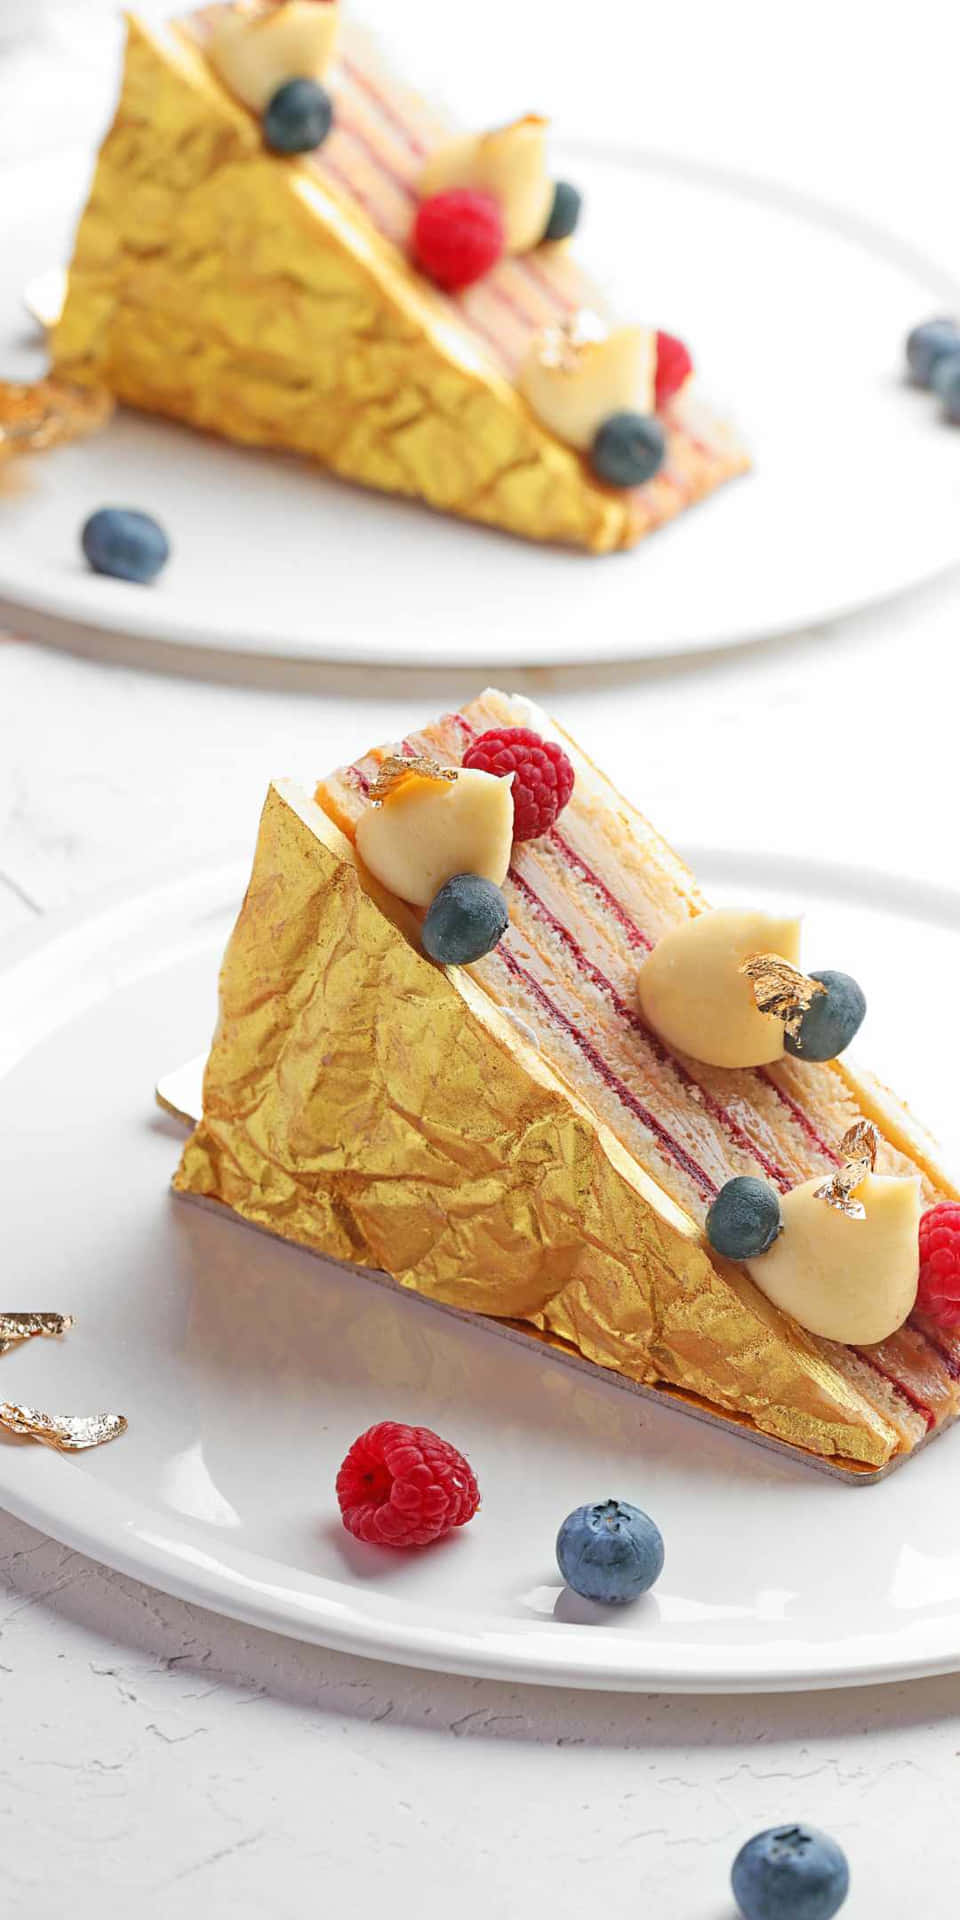 Pixel 3 Pastries Background Cake Slices